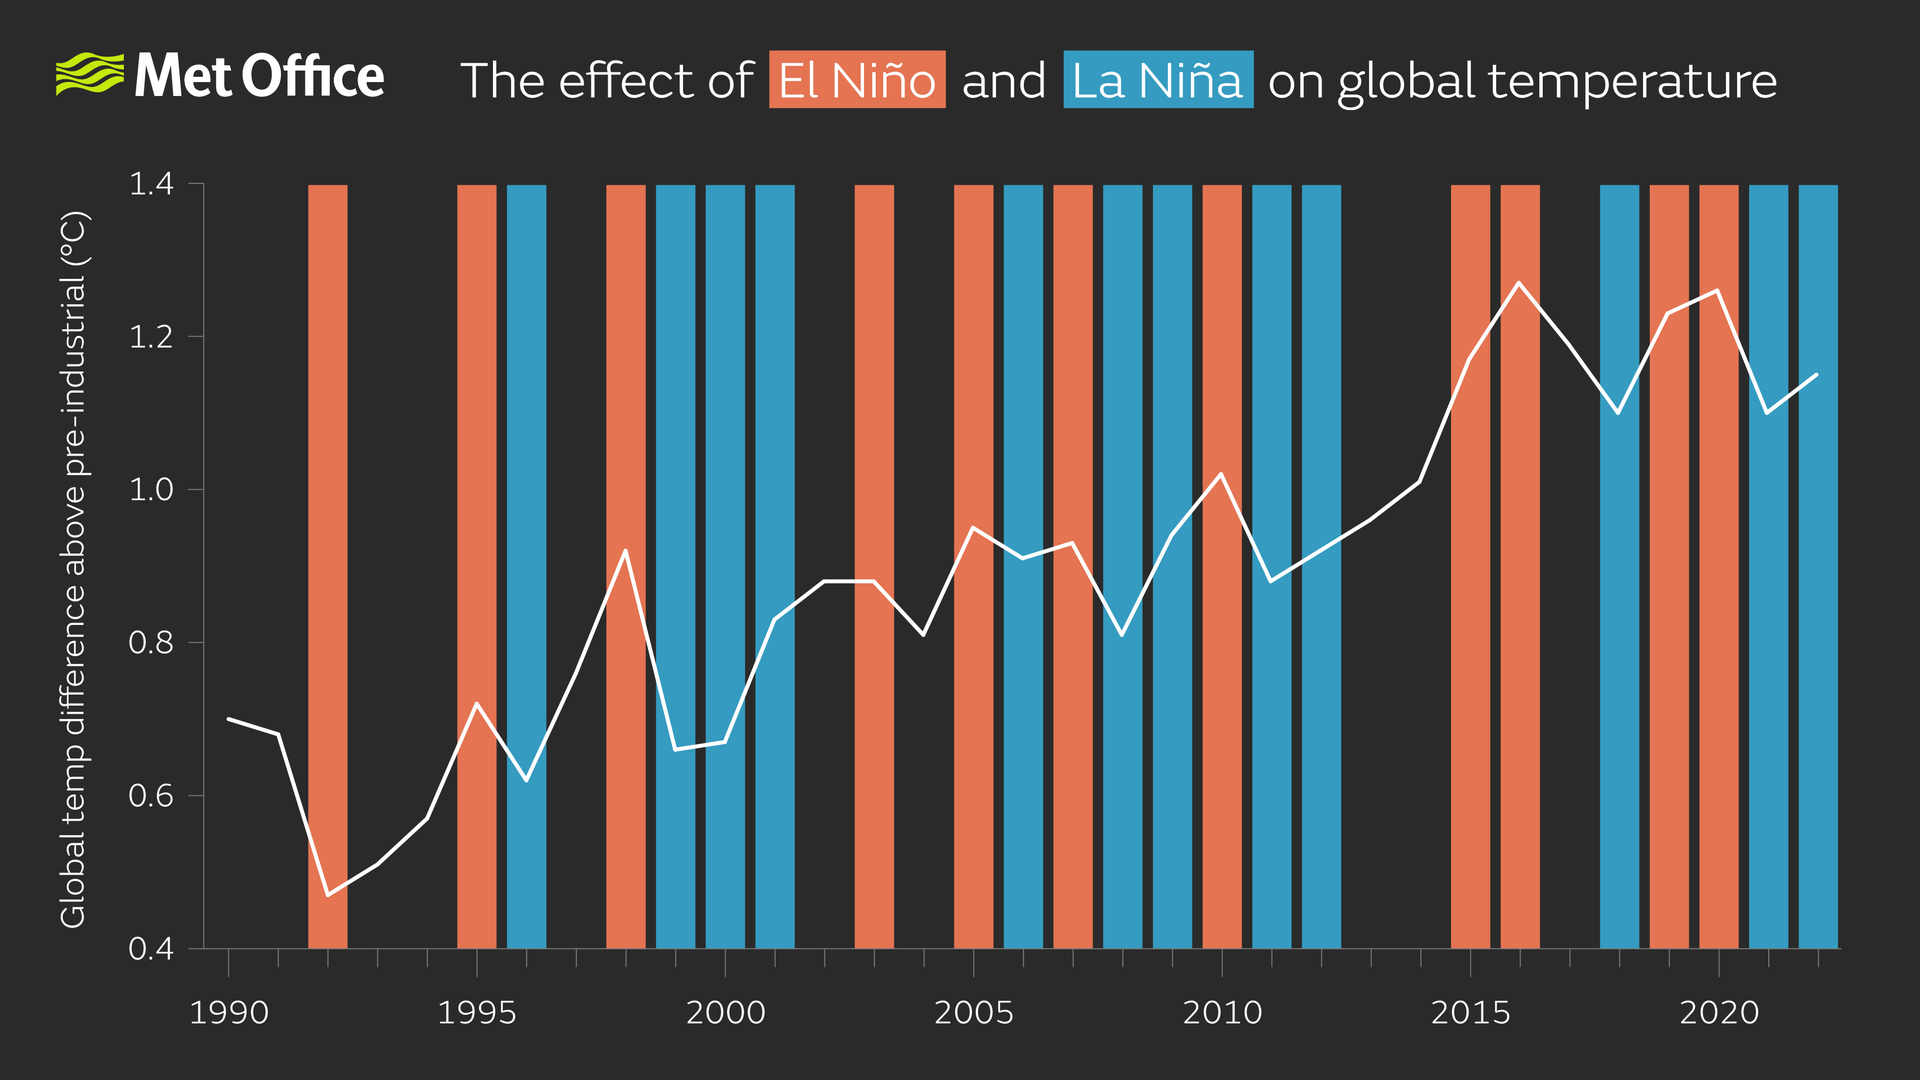 Global temperatures since 1990 with El Niño and La Niña years marked.